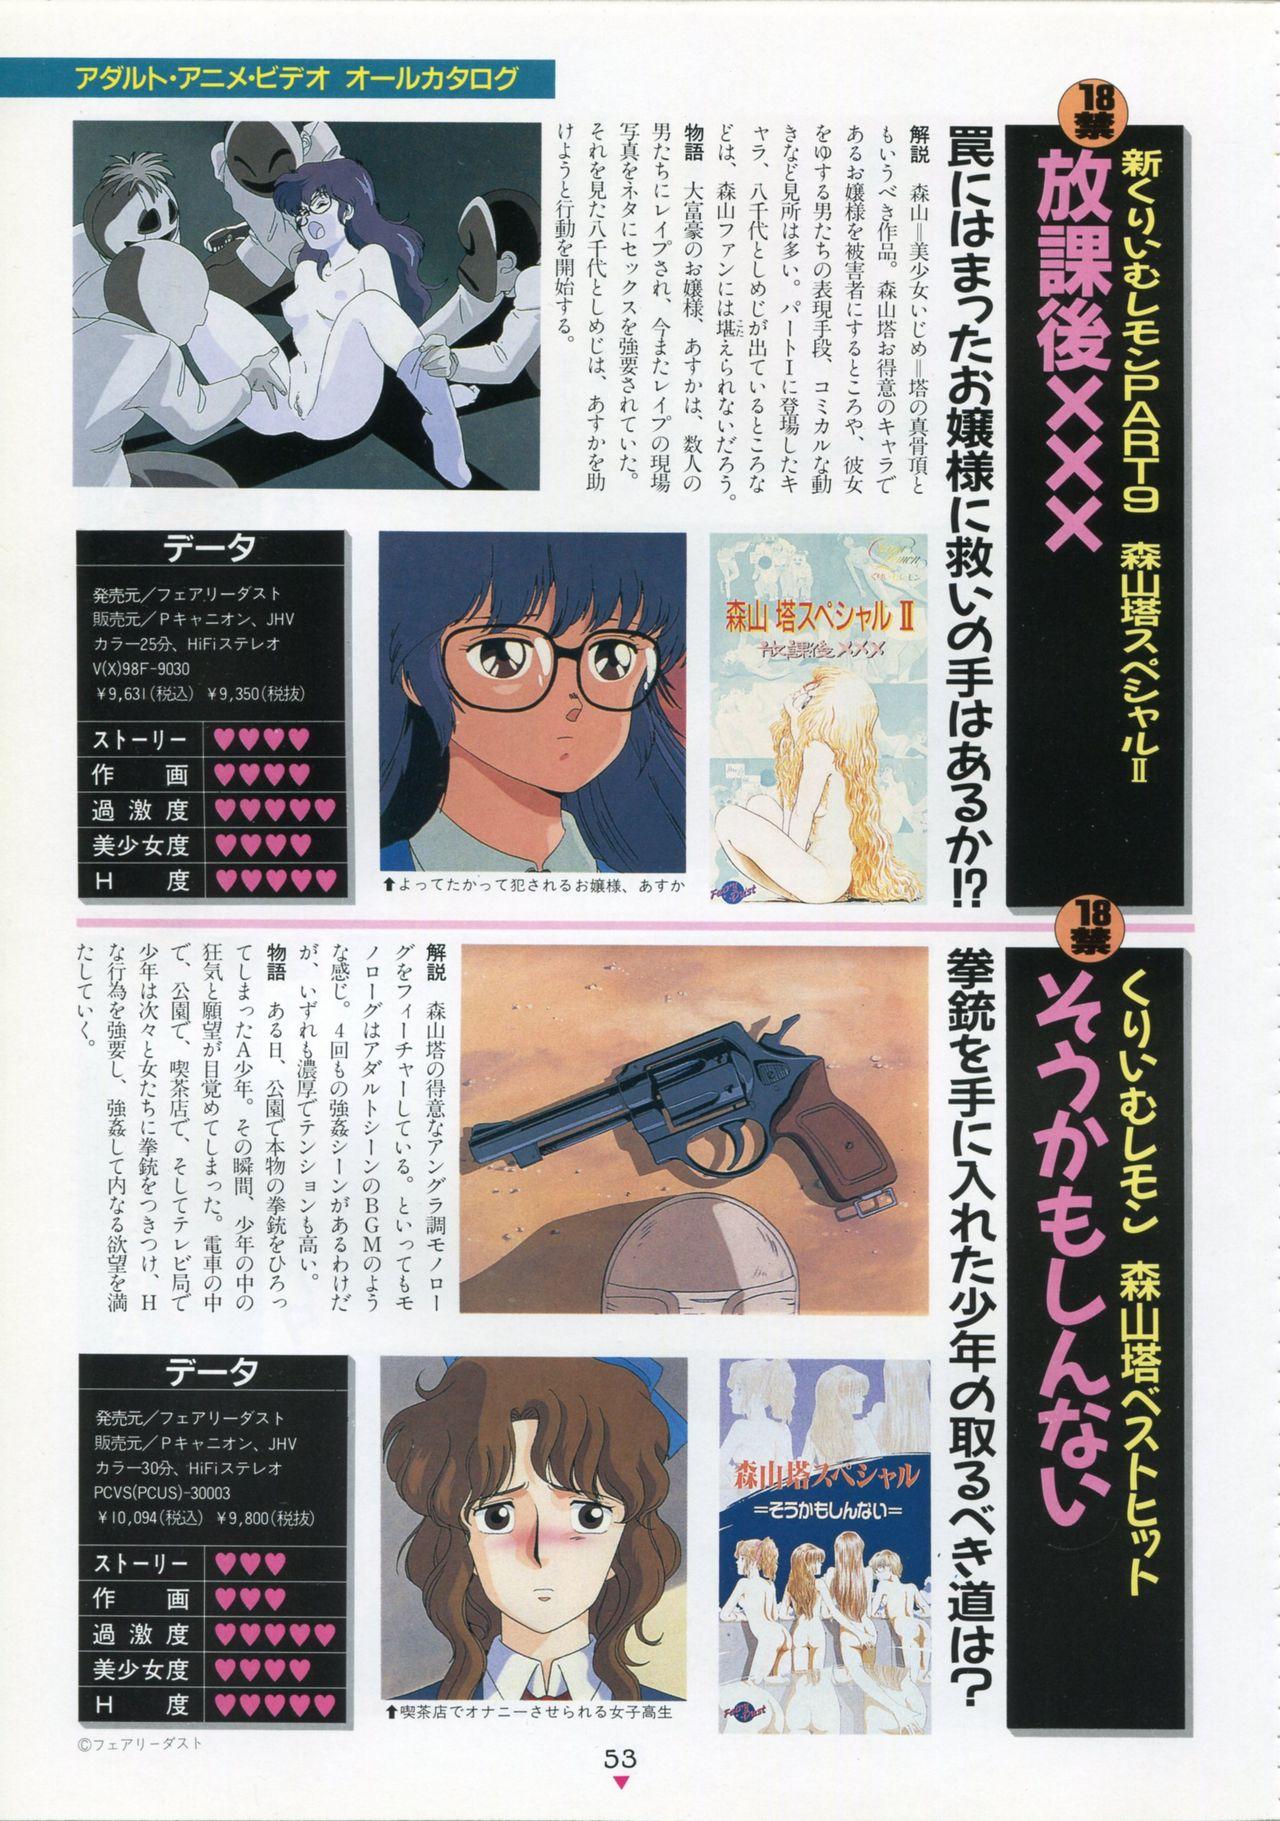 Bishoujo Anime Daizenshuu - Adult Animation Video Catalog 1991 48